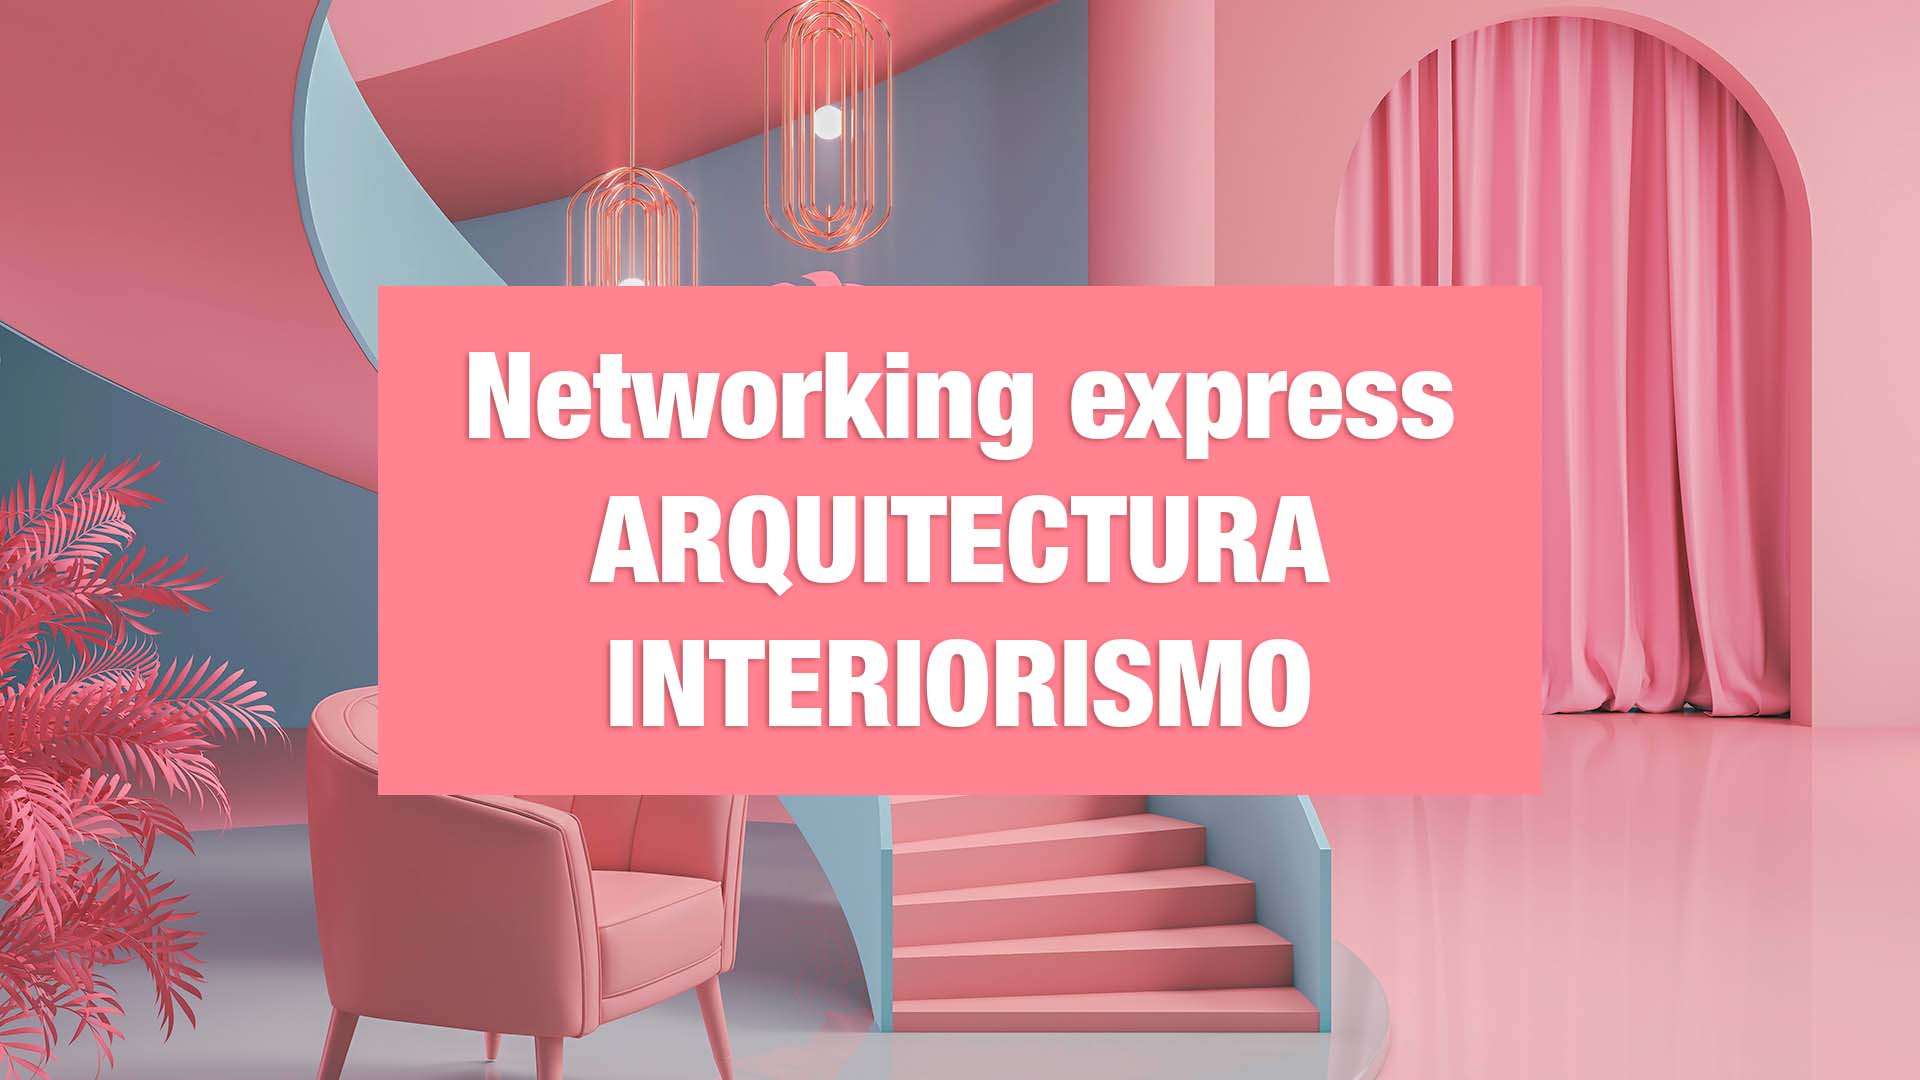 Networking Express Arquitectura & Interiorismo